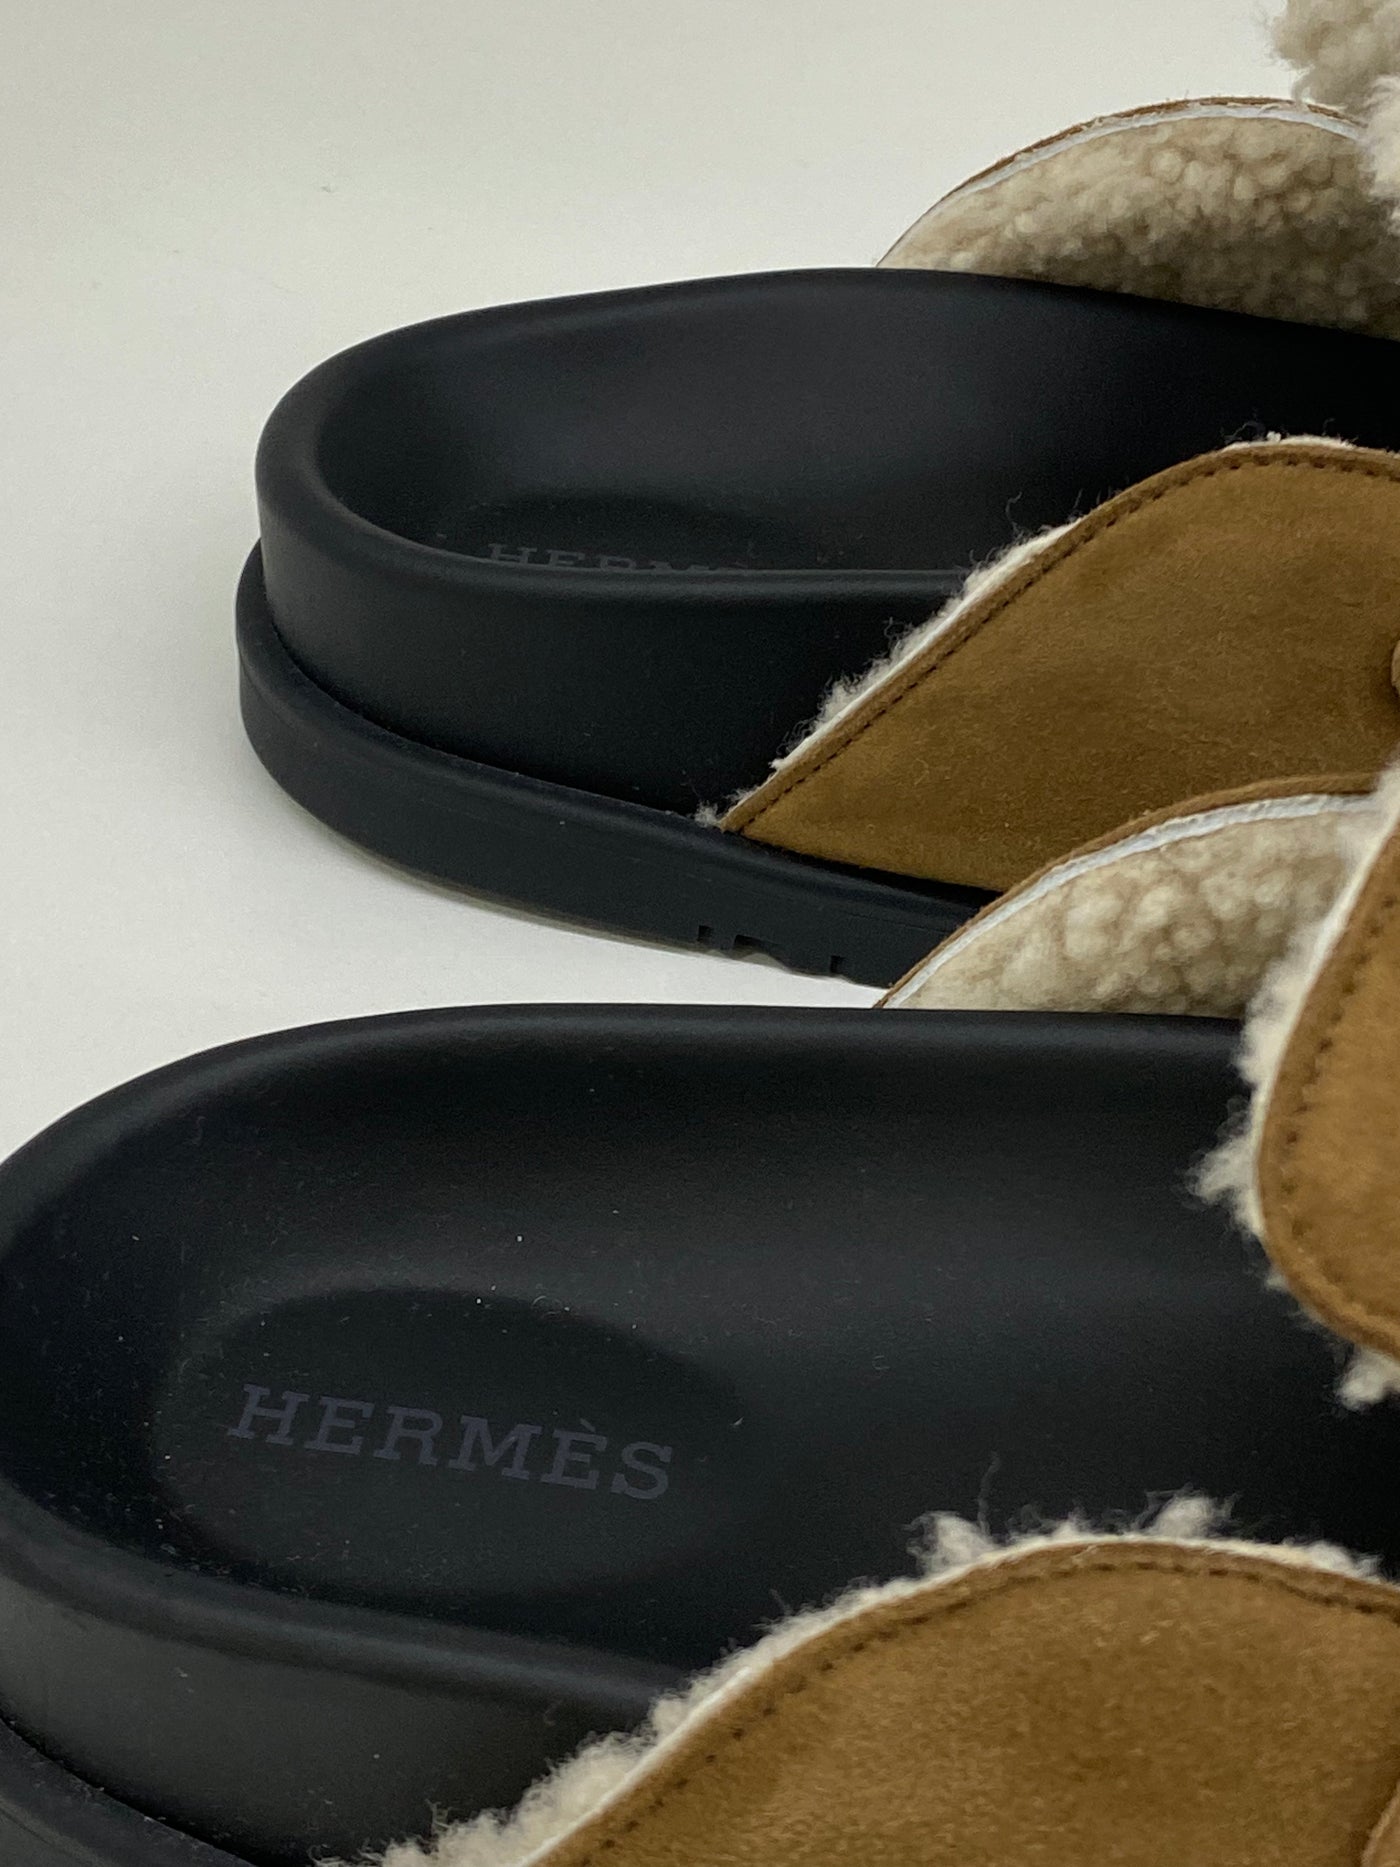 Hermes Go Mule Brown Suede & Shearling - Size 38.5